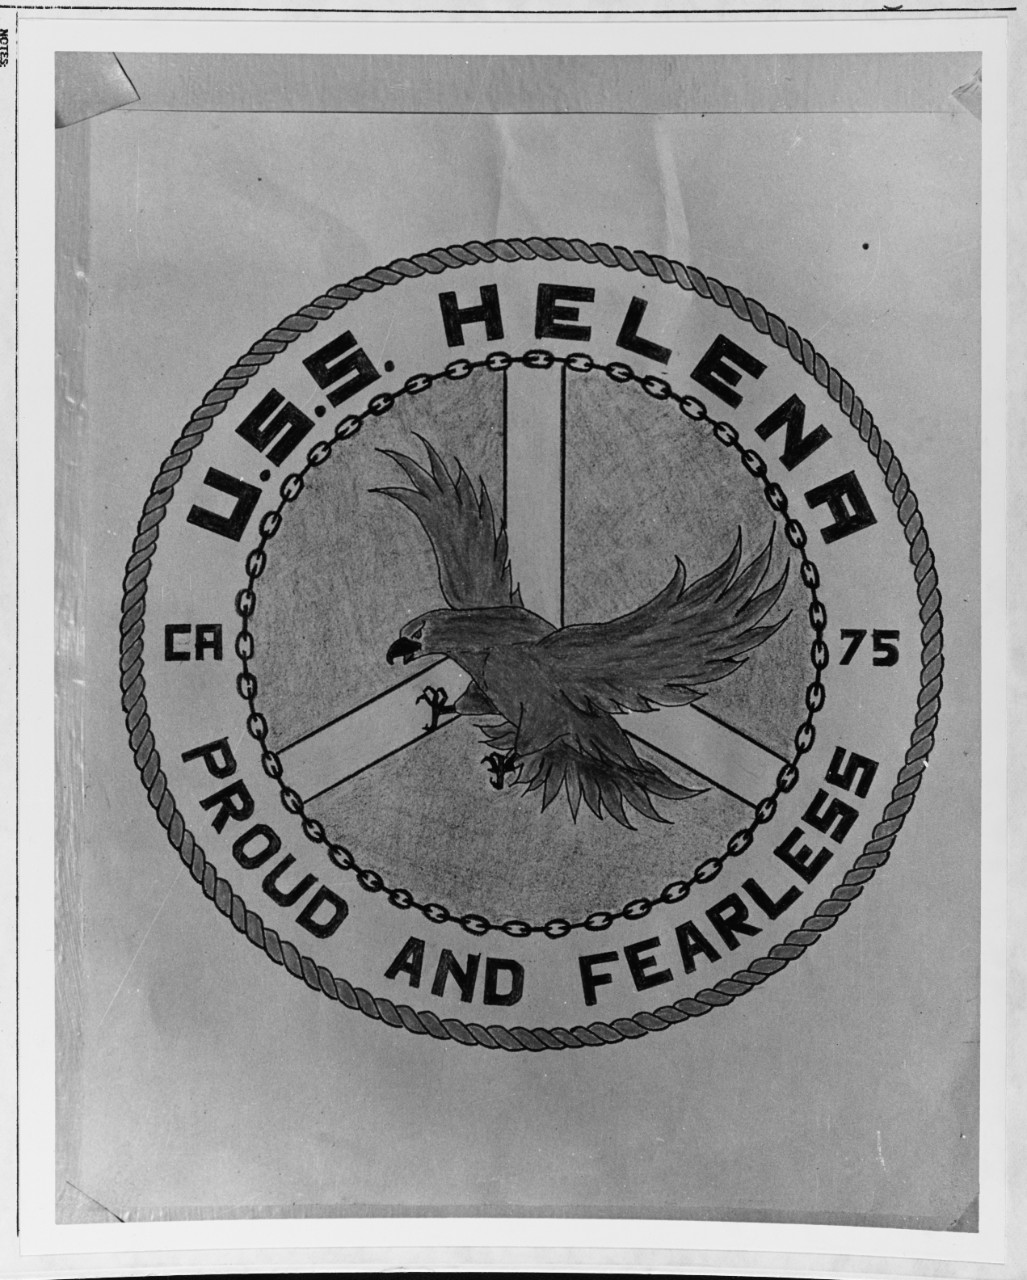 Photo #: USN 1081502  USS Helena (CA-75)